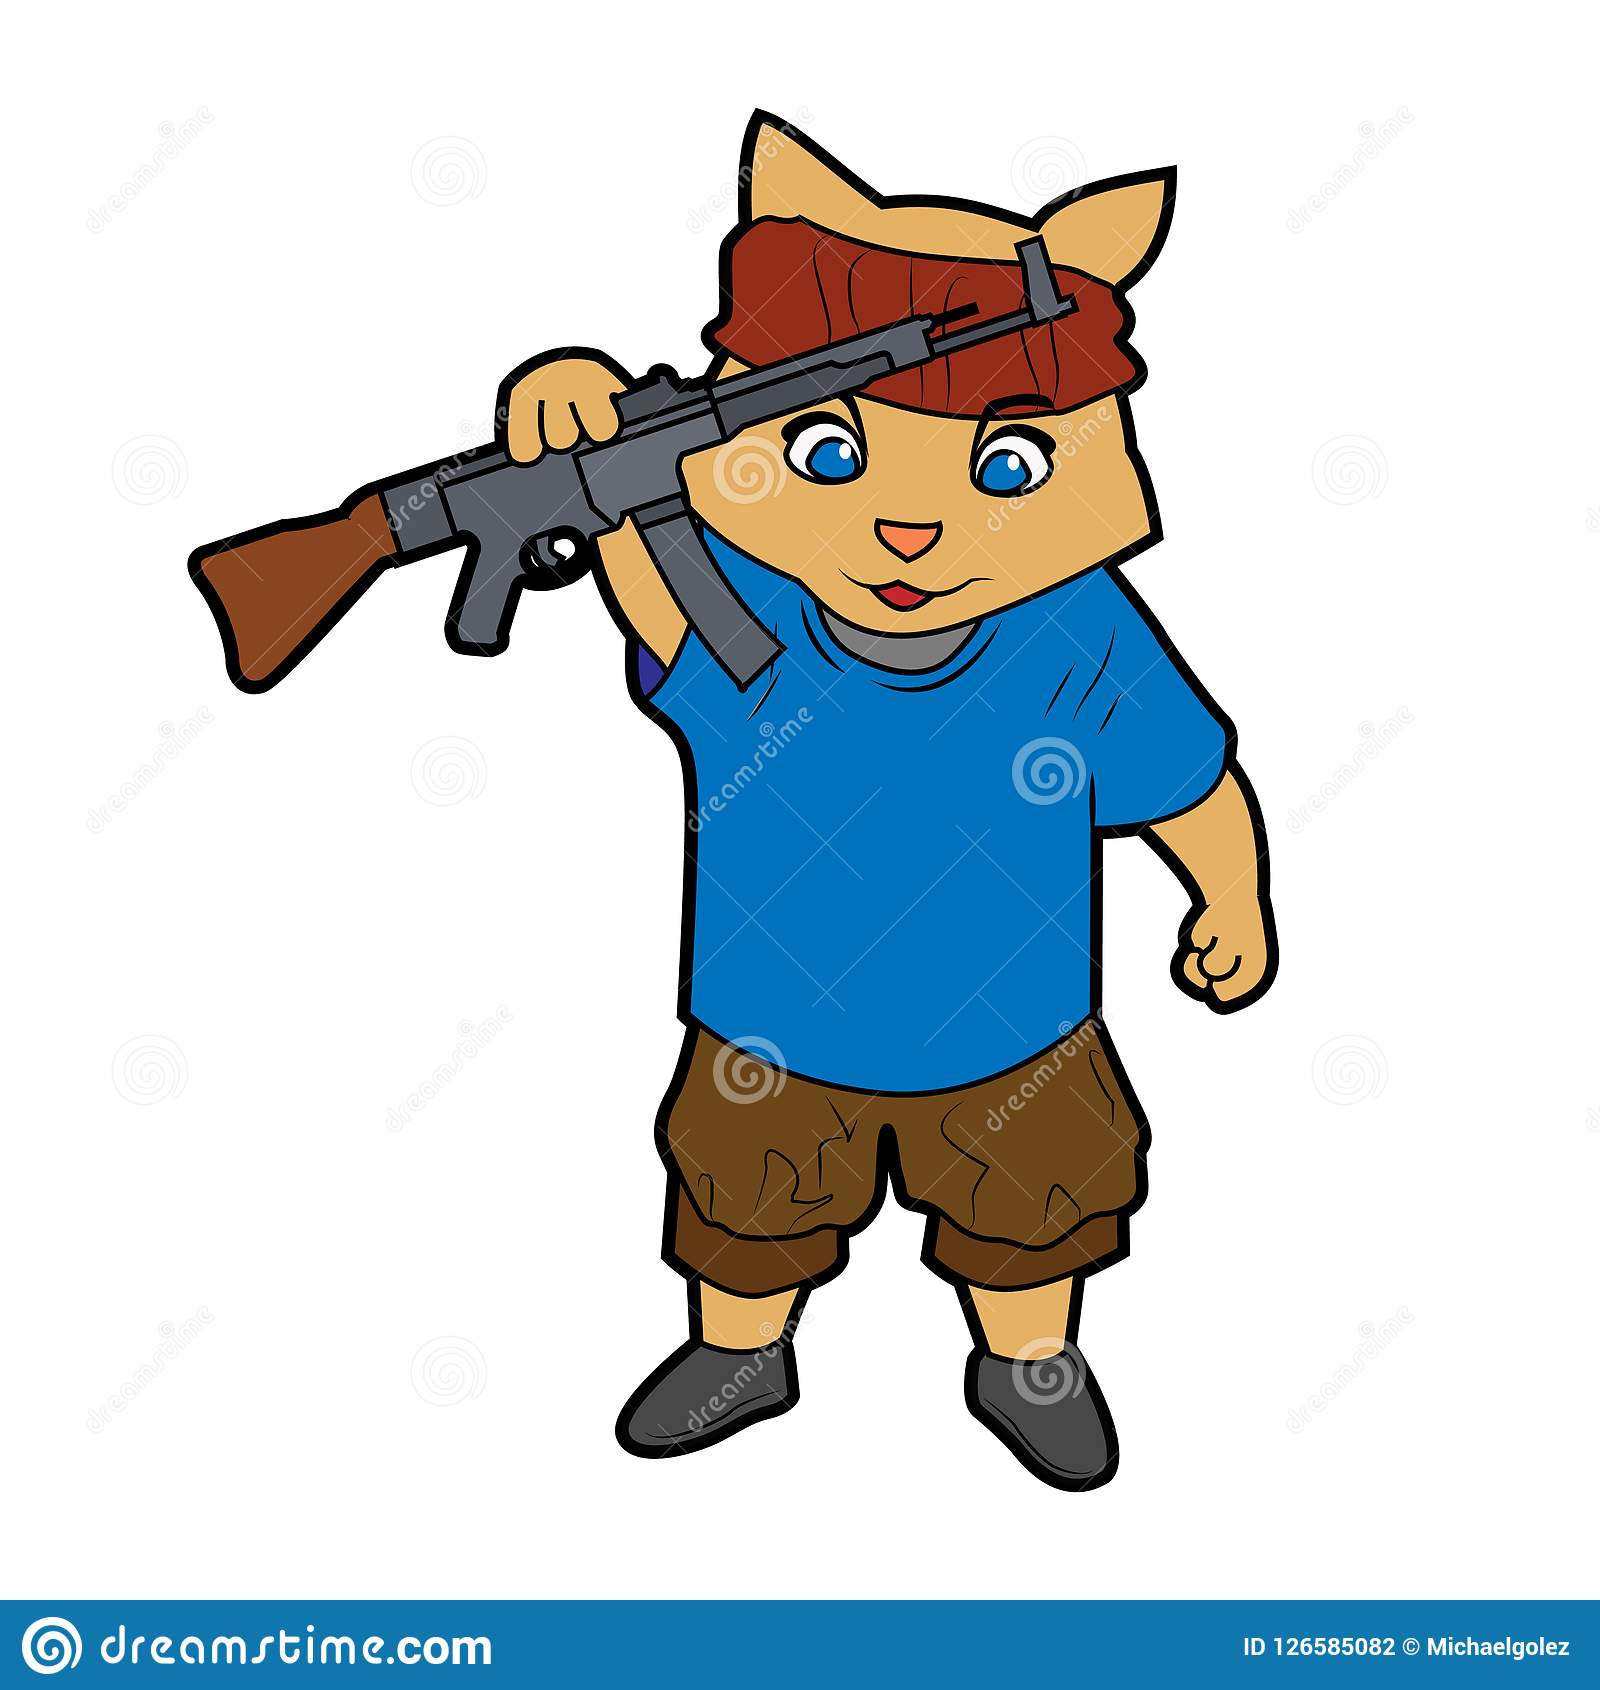 Cat Holding A Gun Cartoon Character Illustration Stock